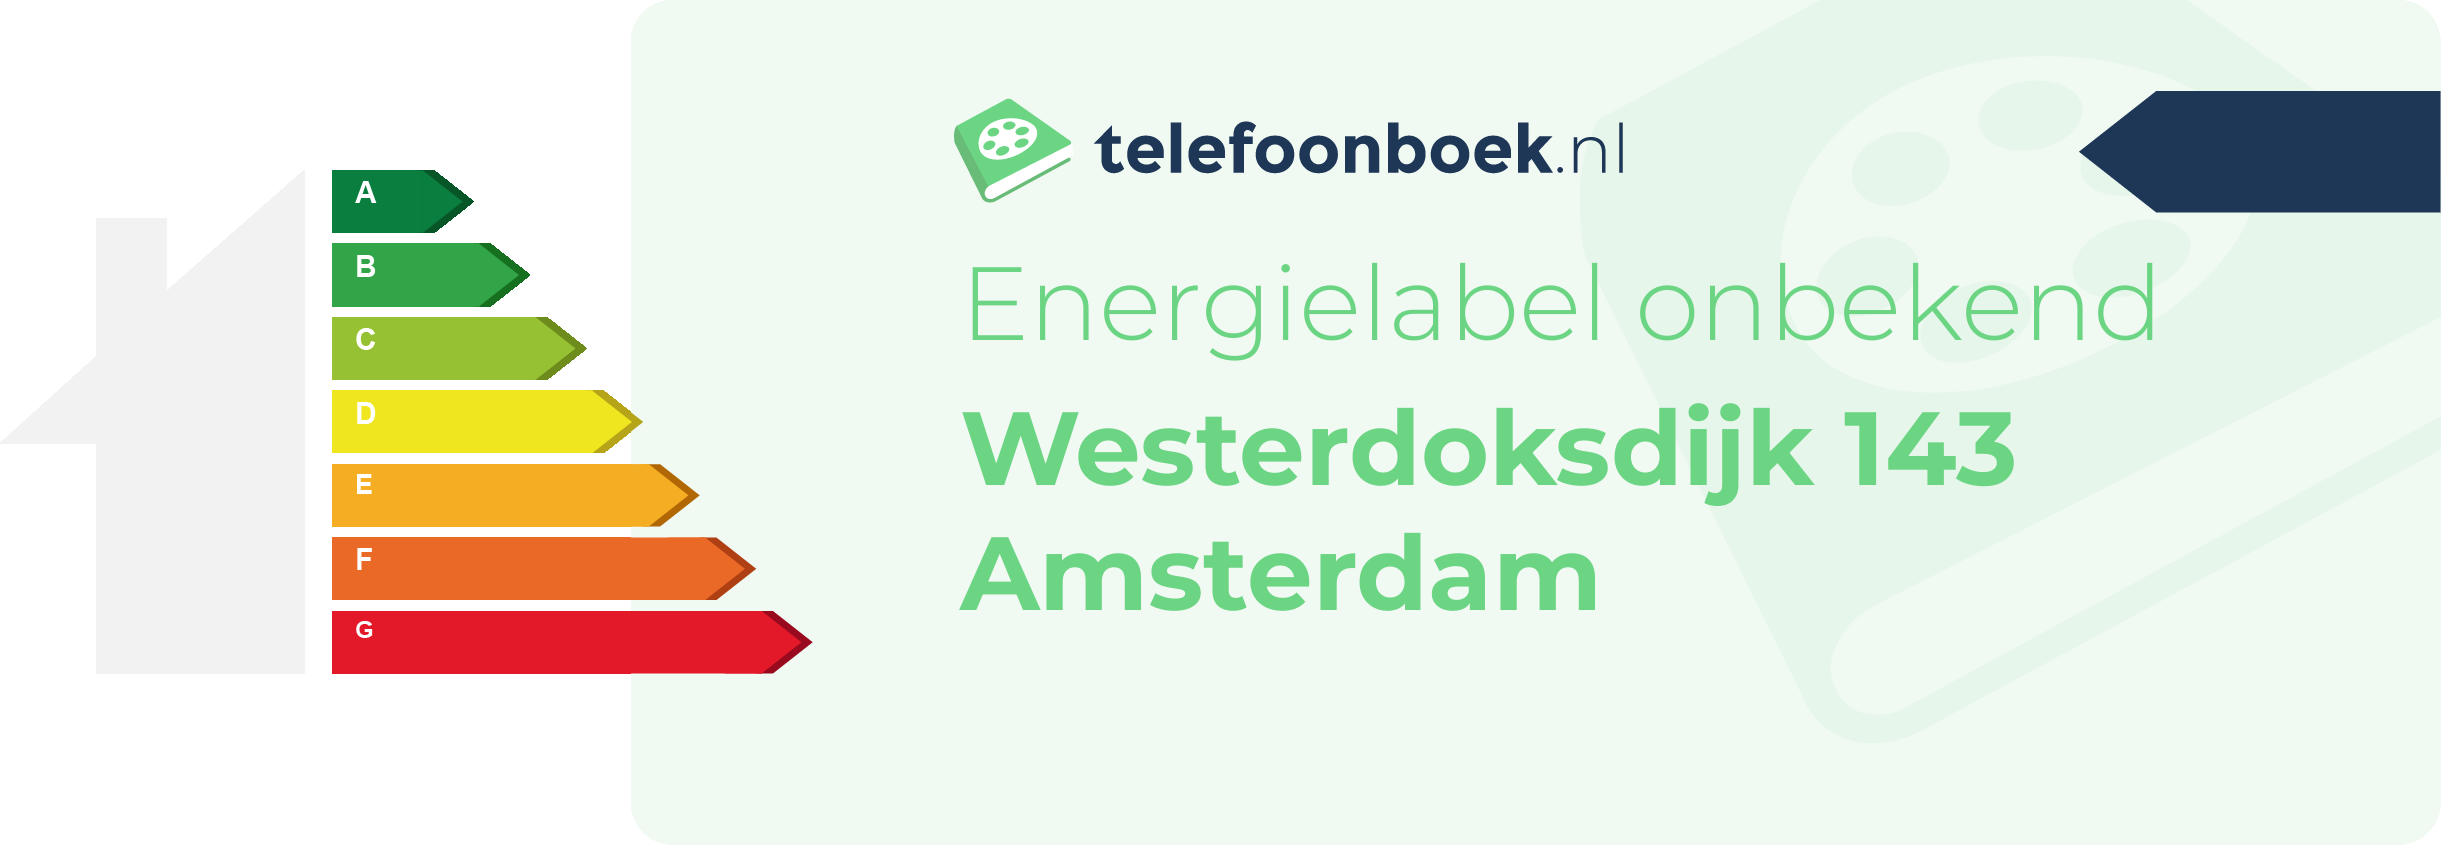 Energielabel Westerdoksdijk 143 Amsterdam